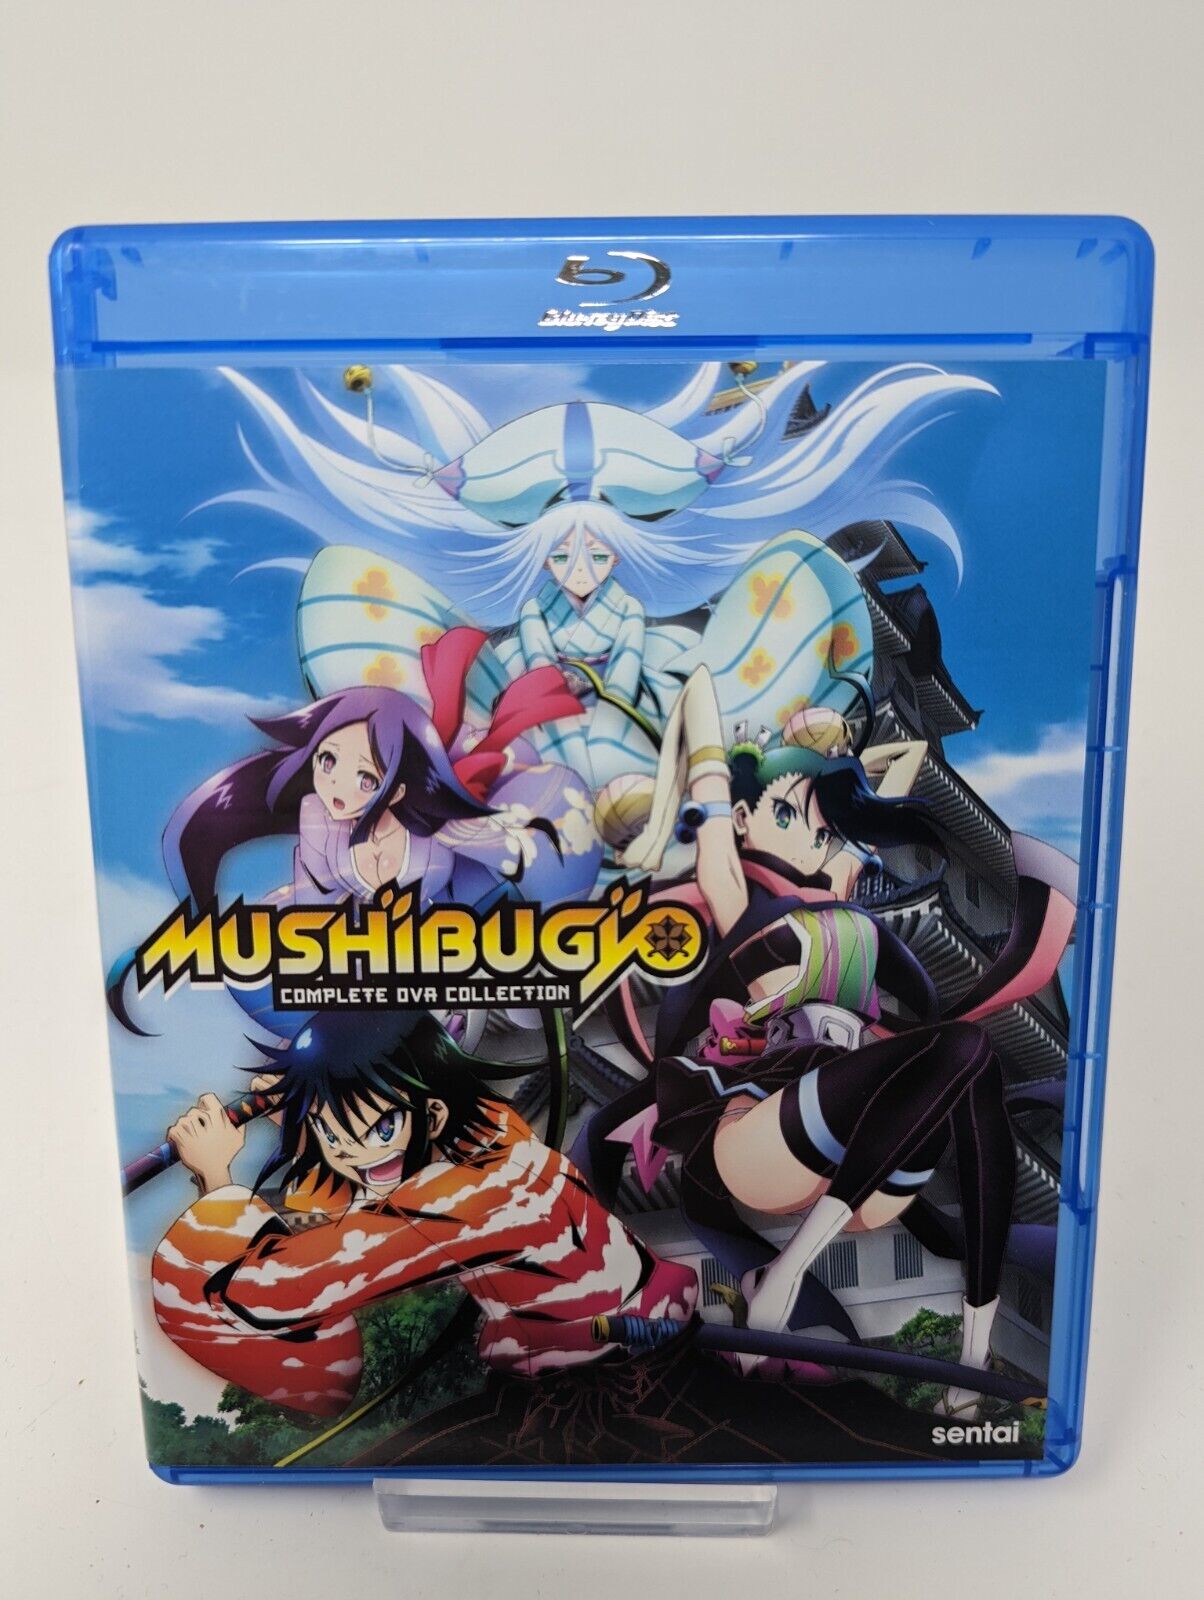 MUSHIBUGYO - Complete OVA Collection Blu-ray Anime* 816726028149 | eBay